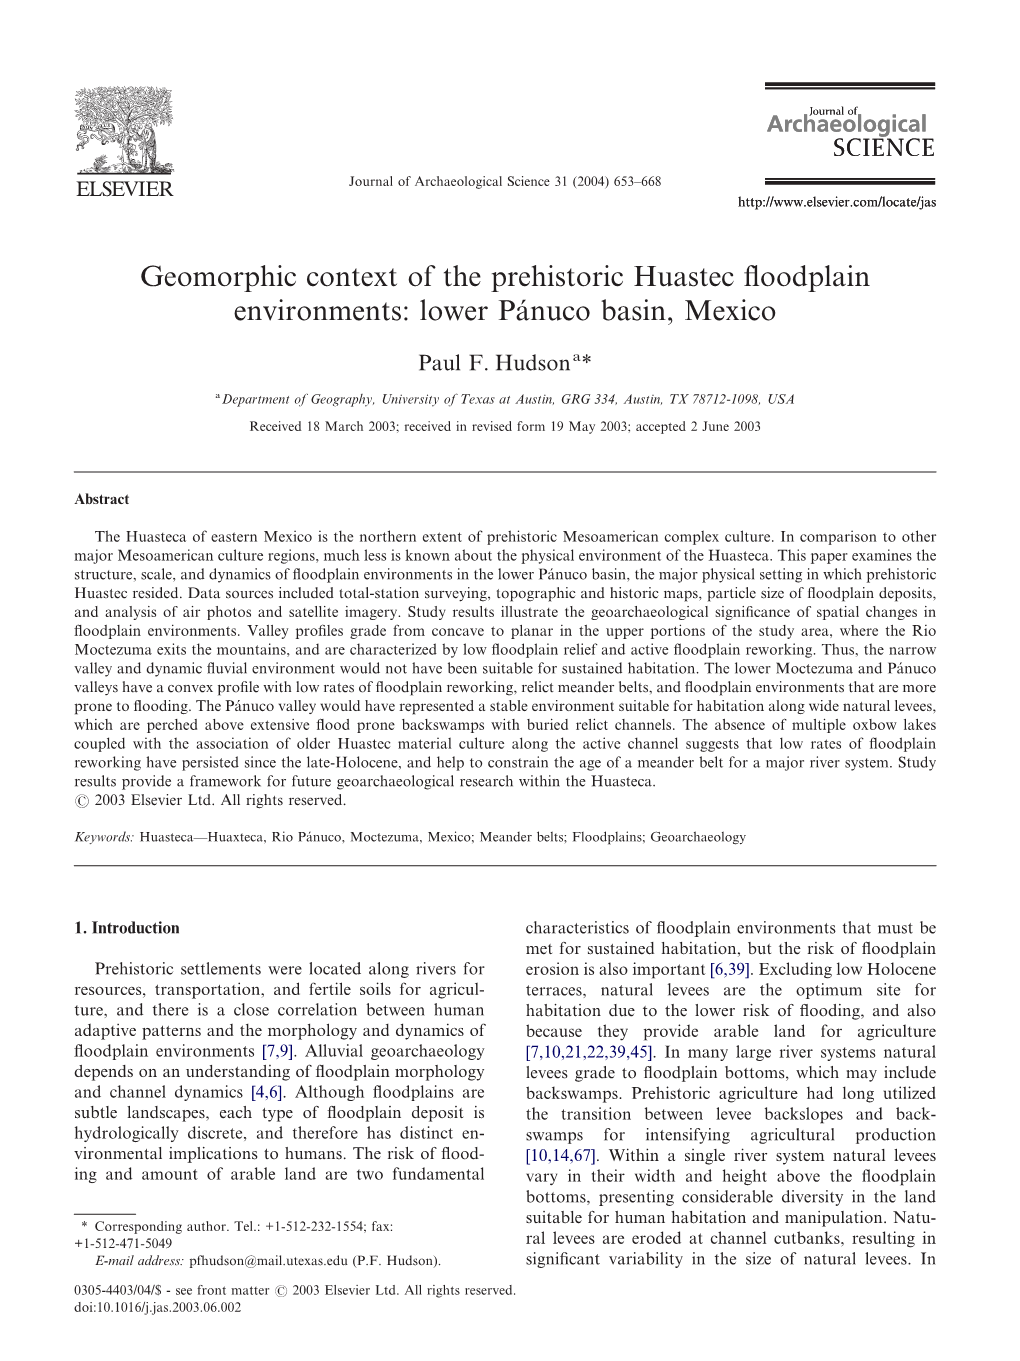 Geomorphic Context of the Prehistoric Huastec Floodplain Environments